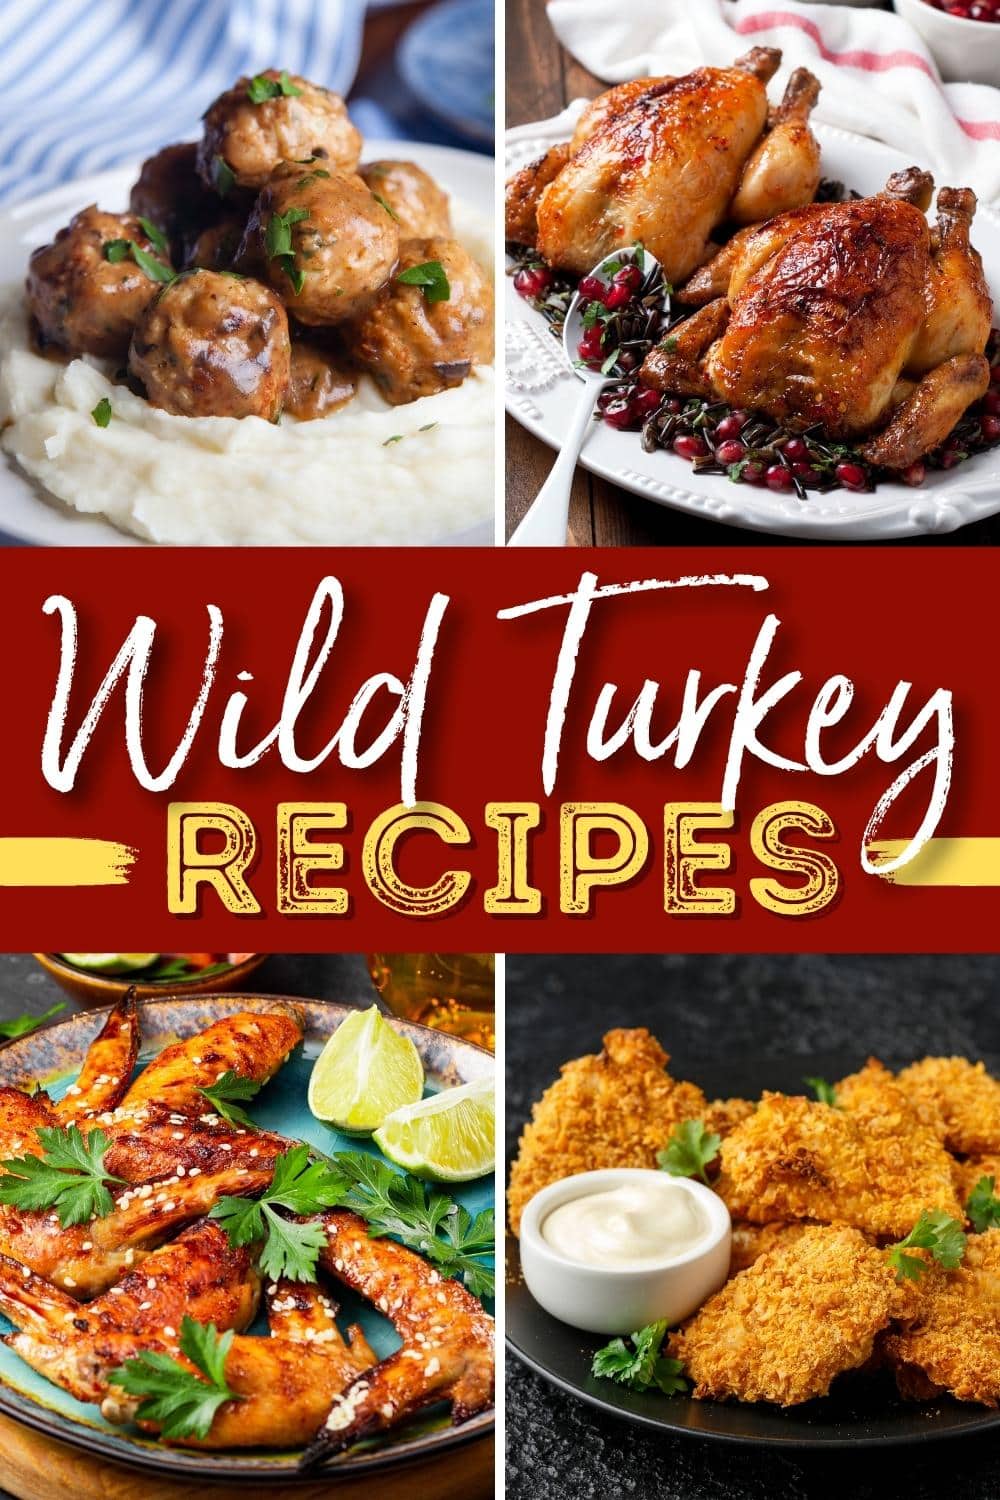 10 Best Wild Turkey Recipes for Dinner - Insanely Good